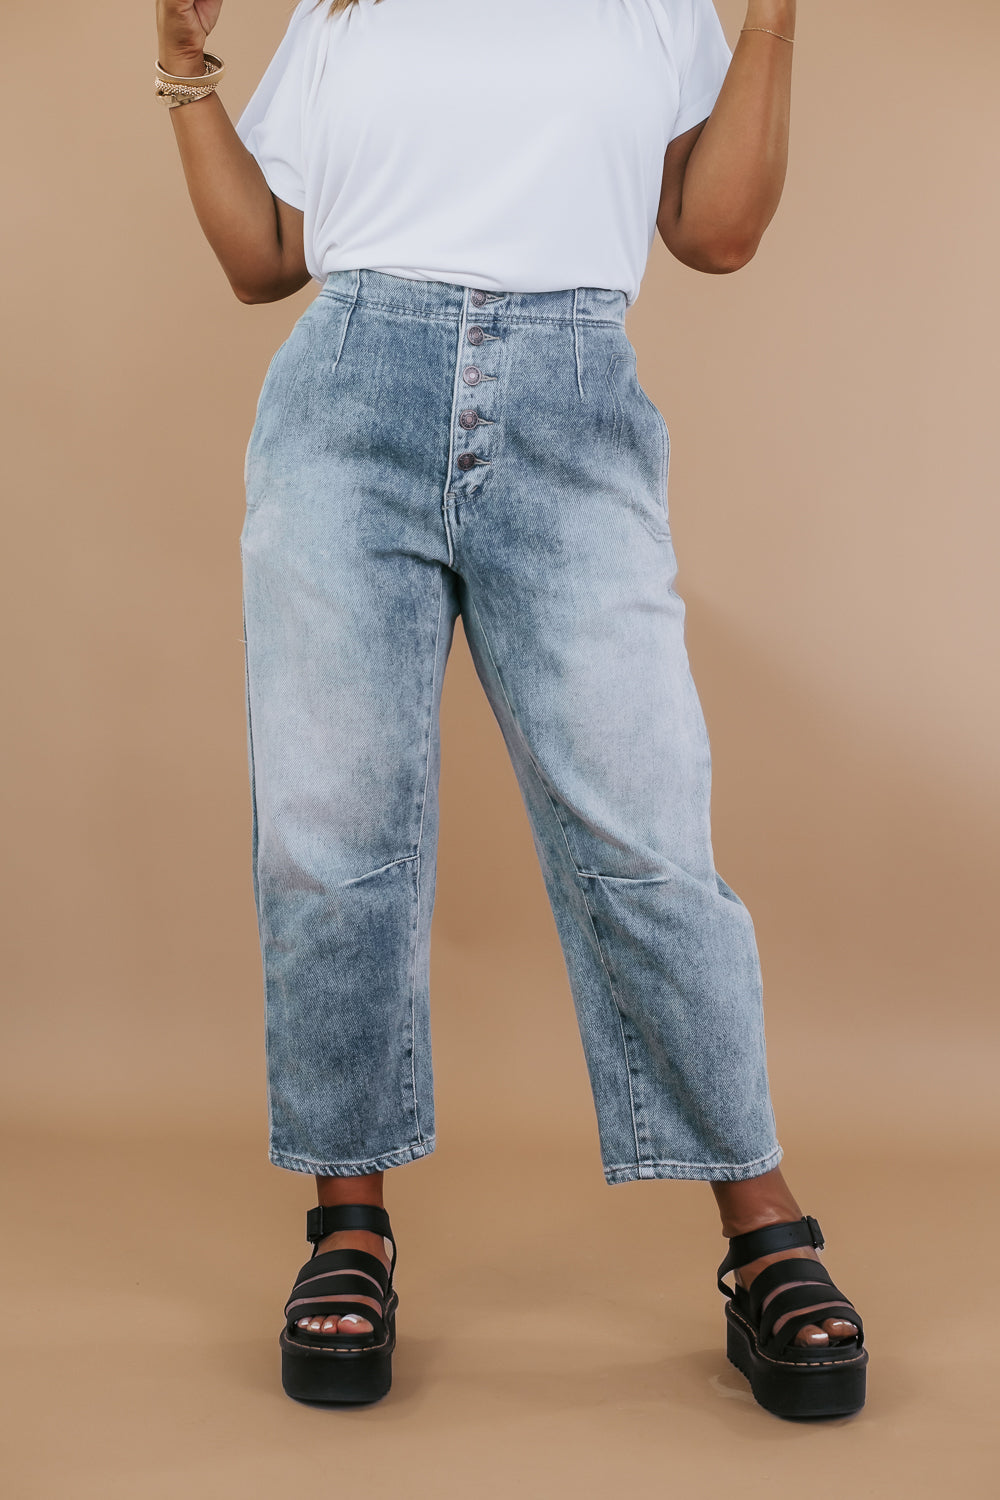 Oli & Hali: Barrel Denim Jeans